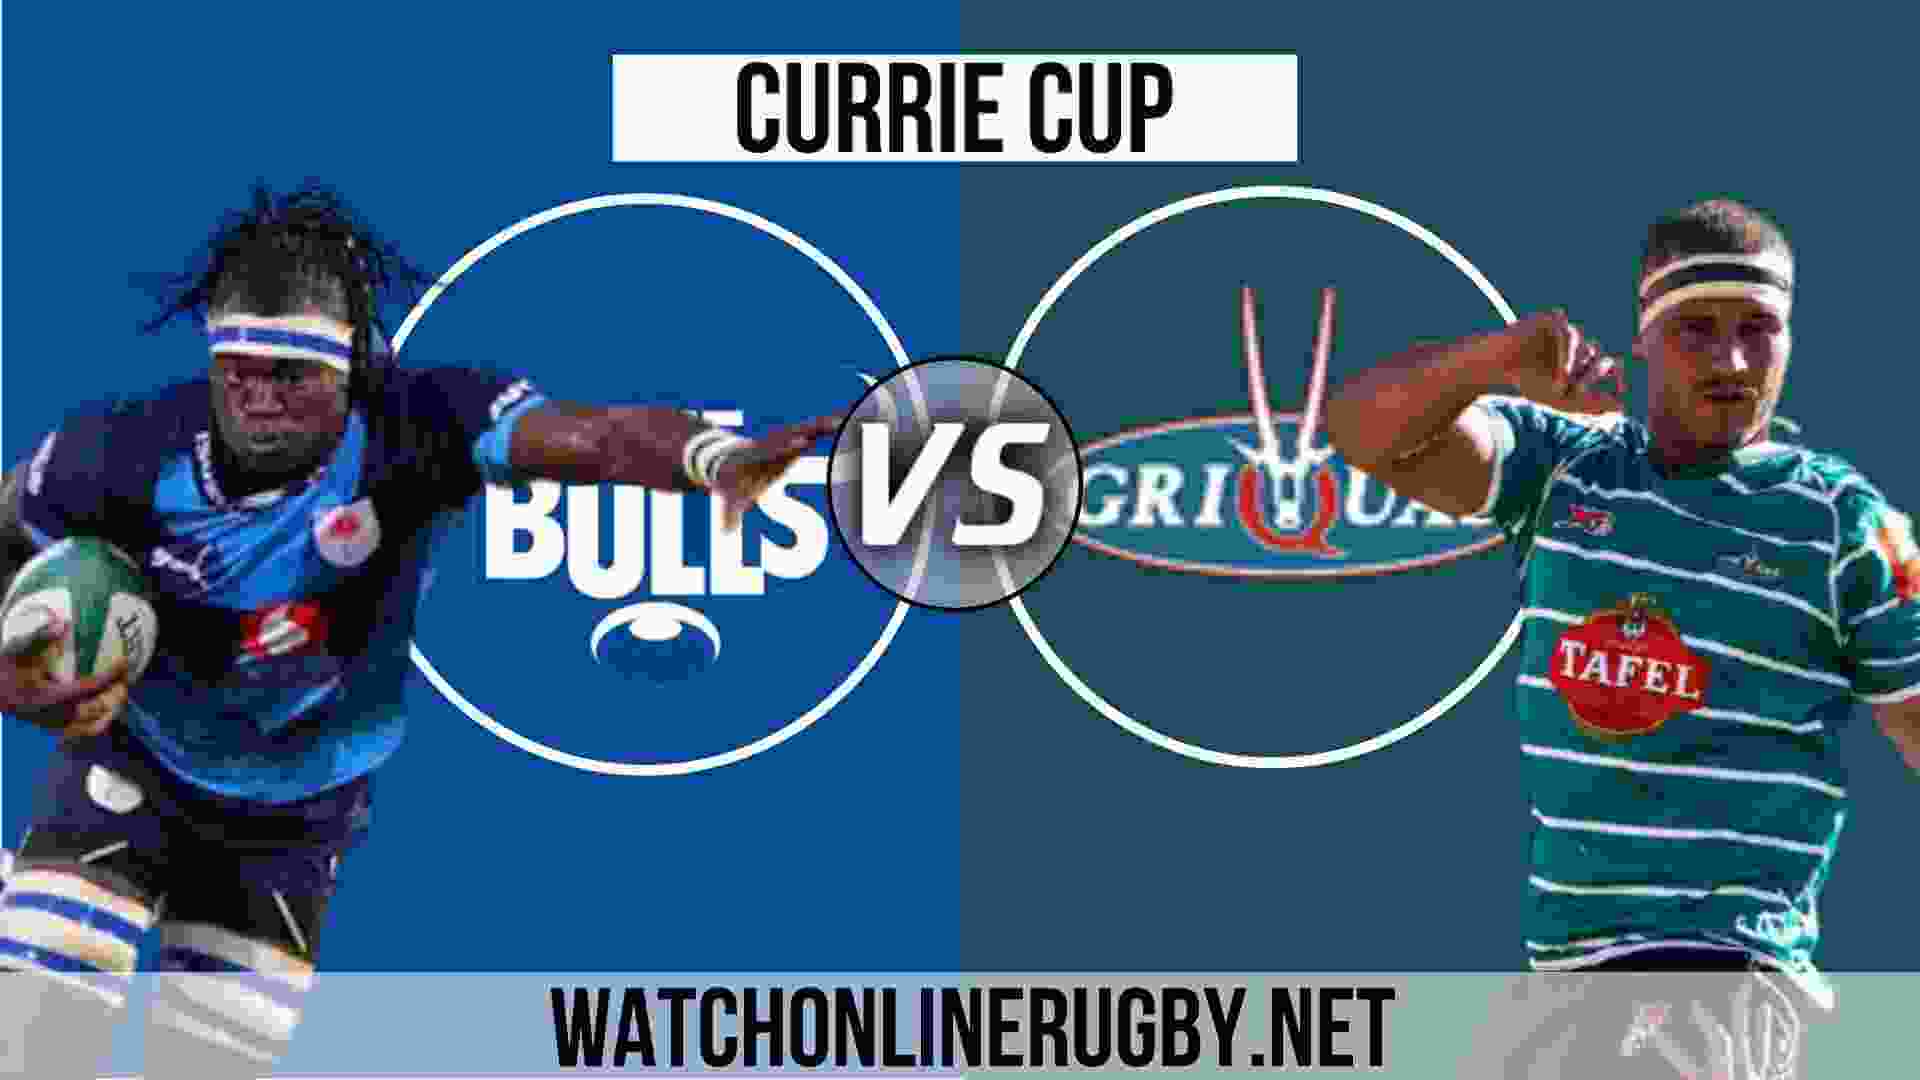 Blue Bulls Vs Griquas Live Stream Currie Cup